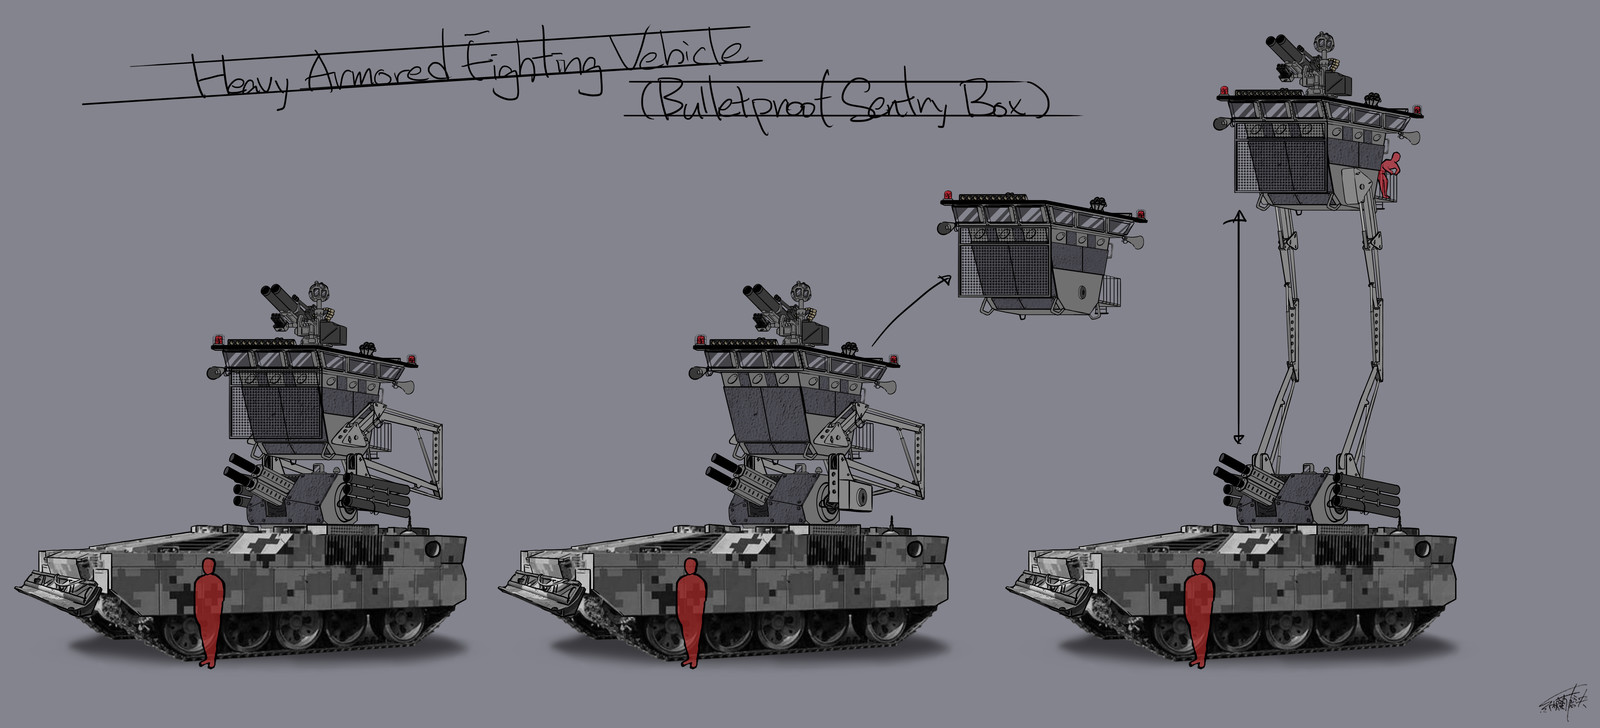 Heavy Armored Fighting Vehicle ( Bulletproof Sentry Box MOD)